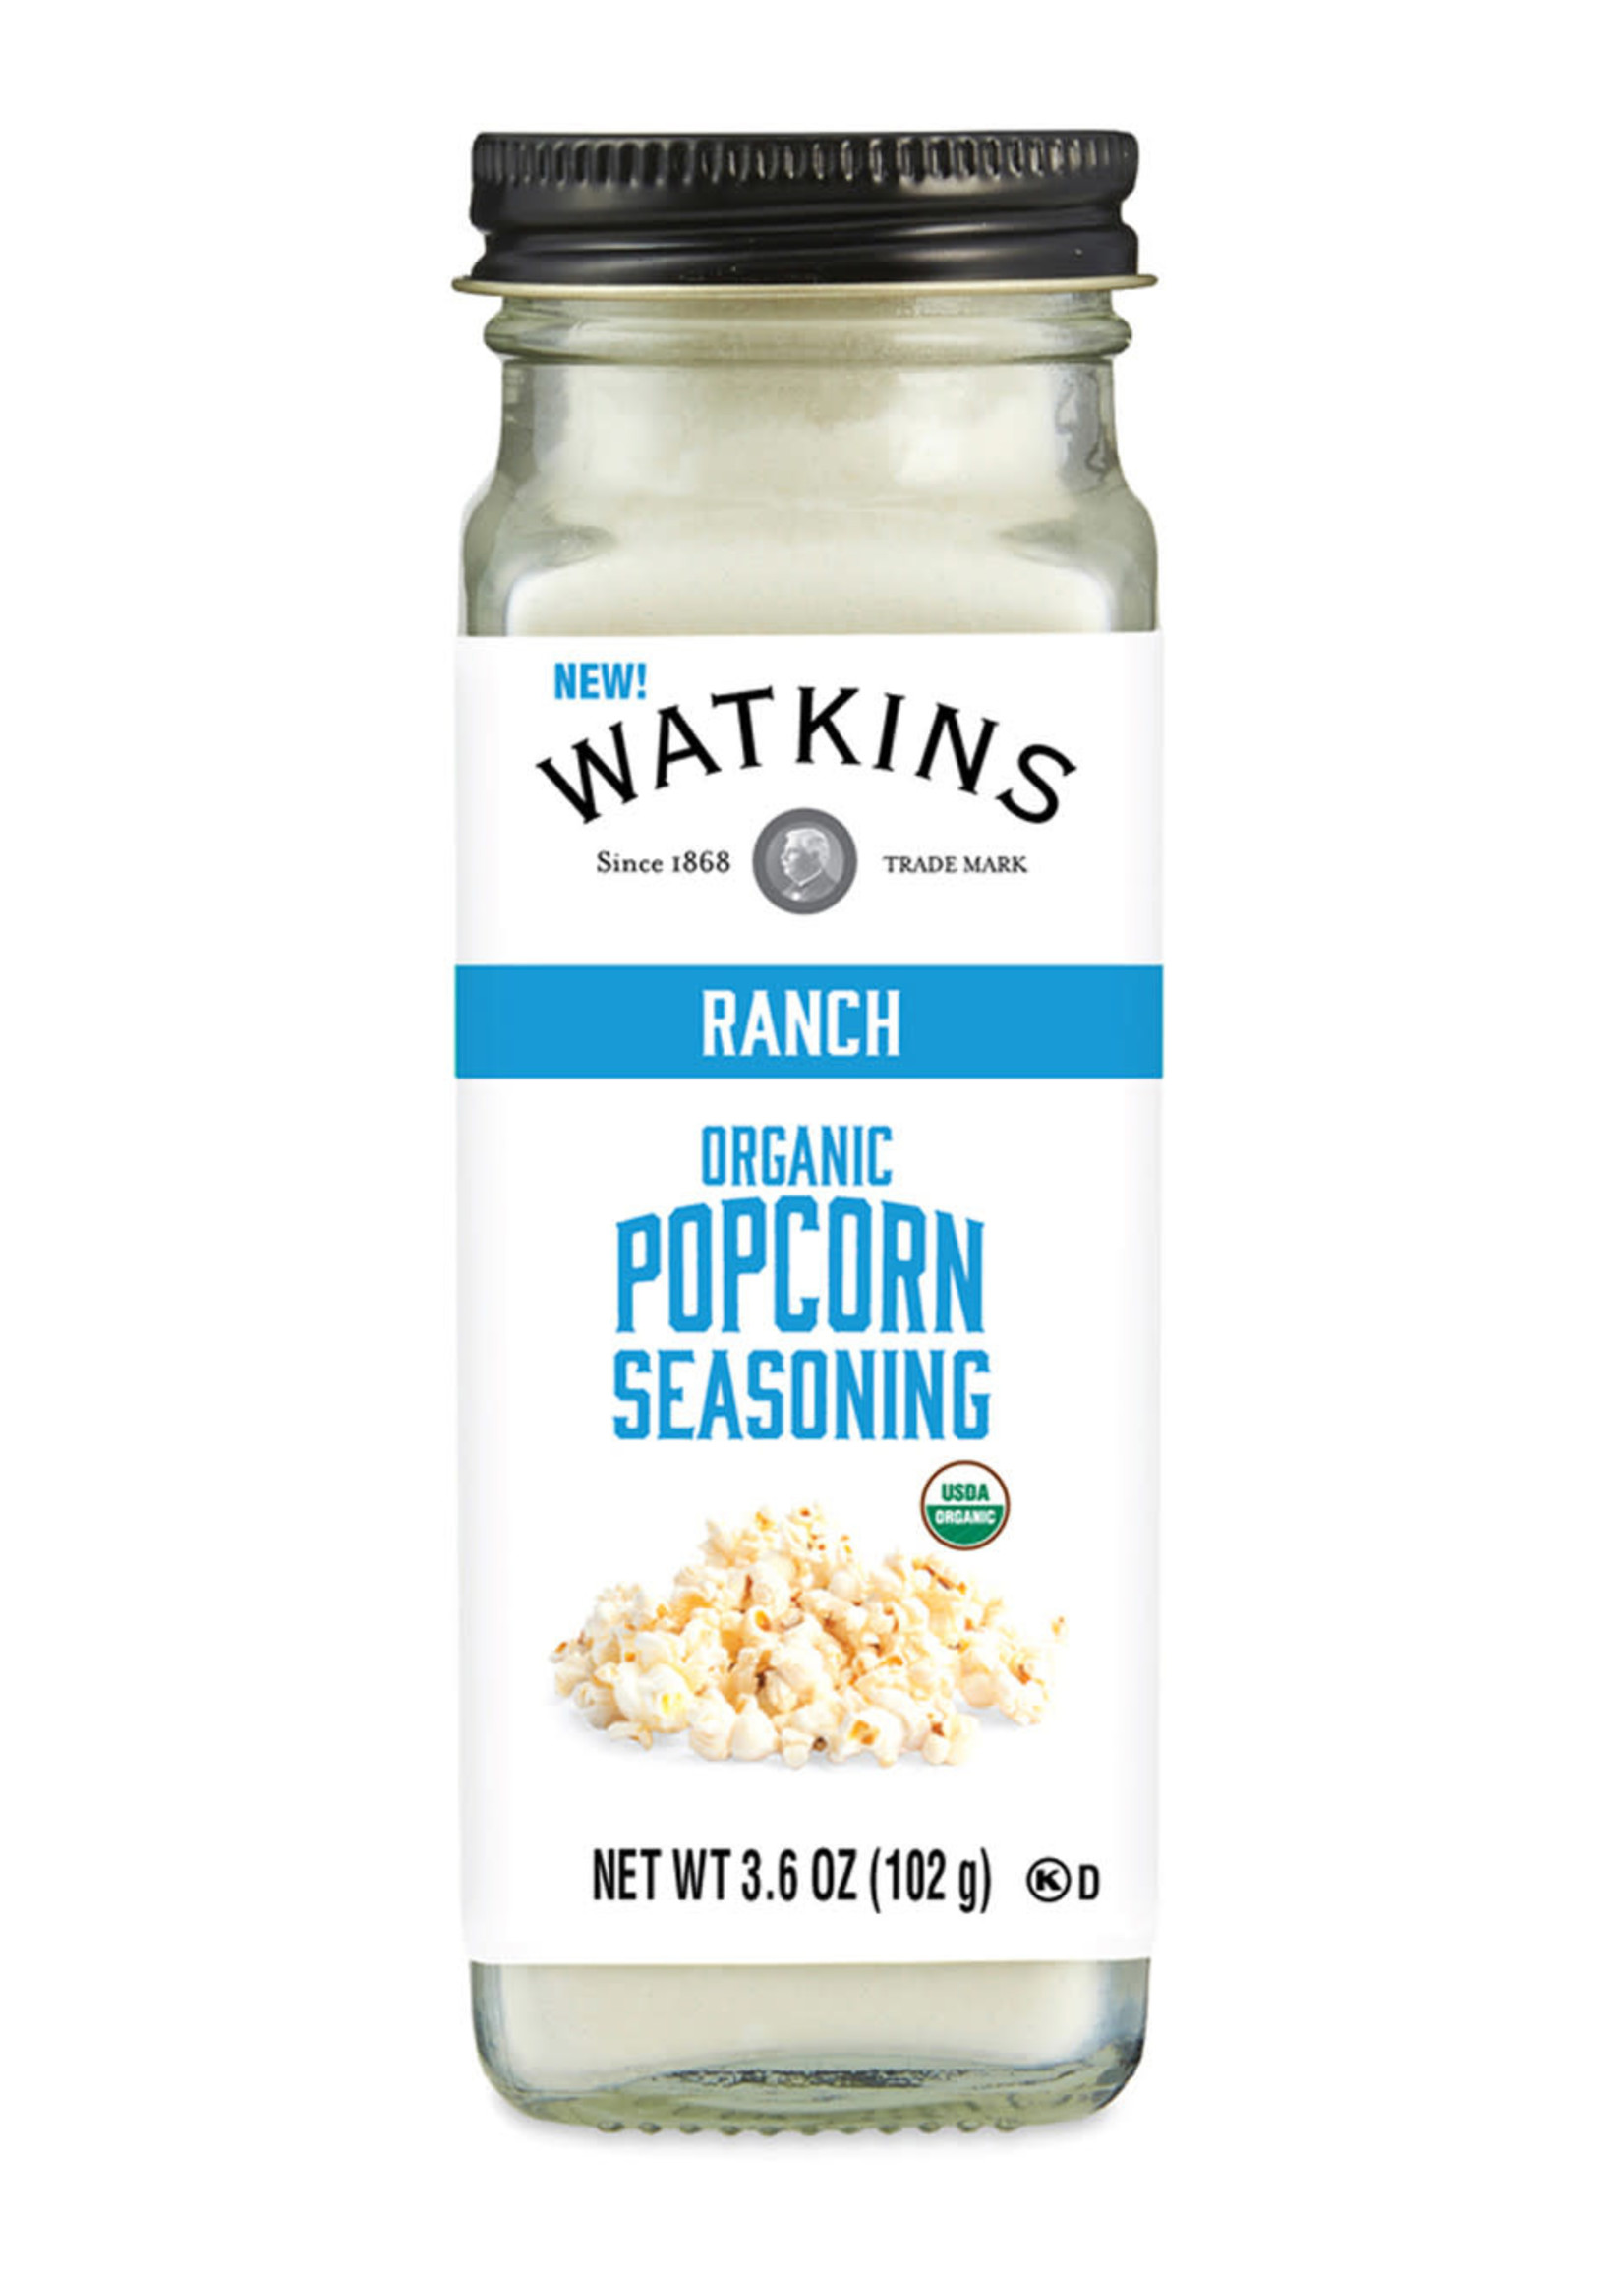 Watkins Watkins Ranch Popcorn Seasoning